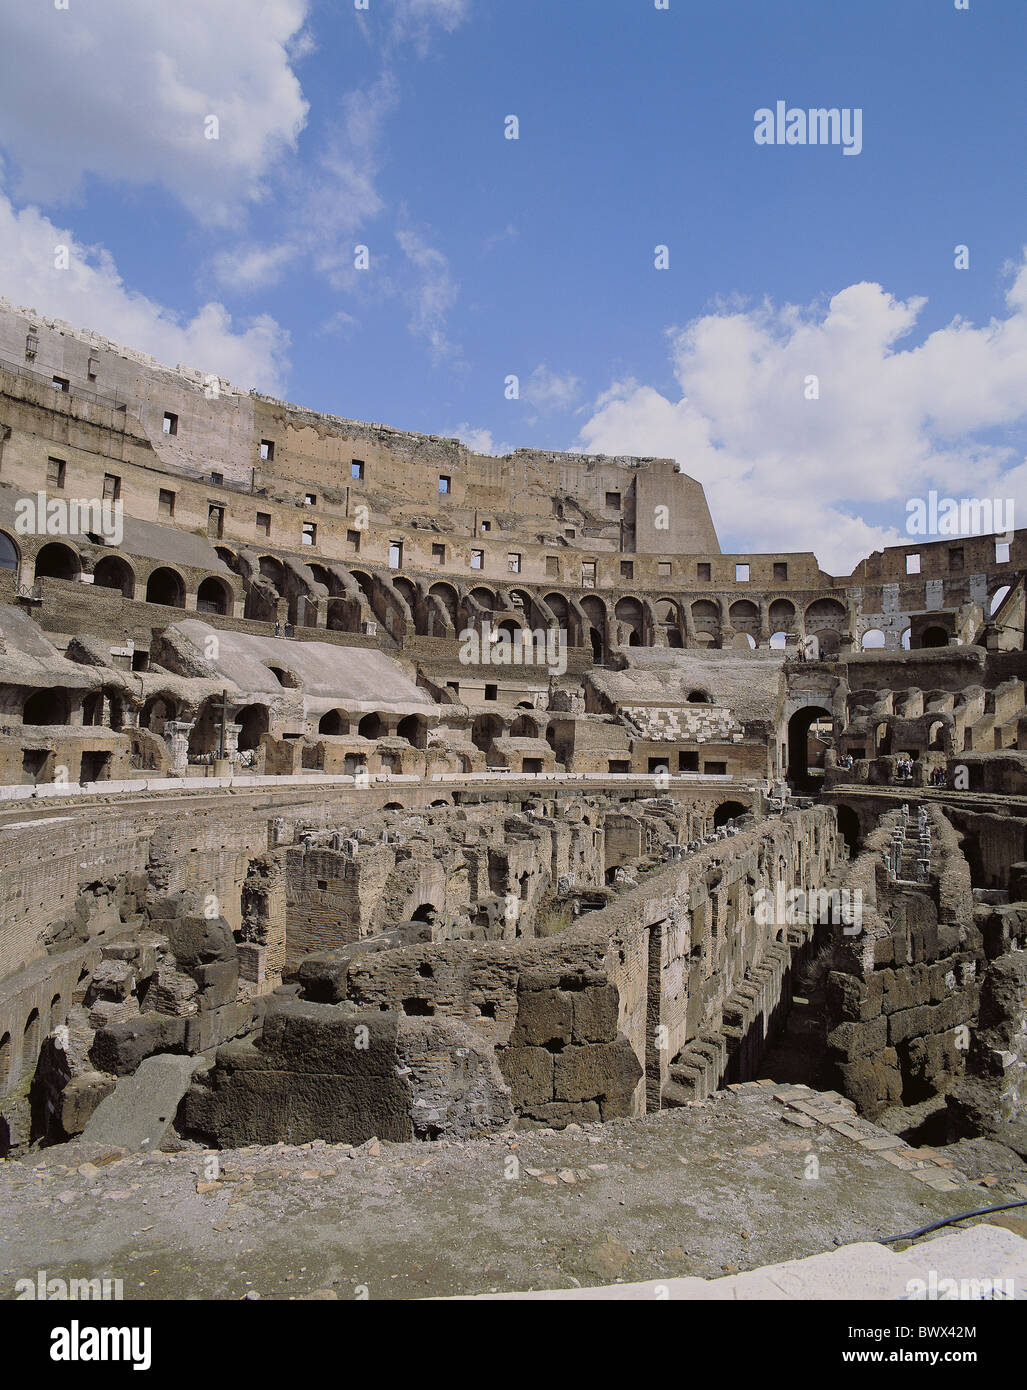 Italy Europe Rome Ancient world antiquity Coliseum inside Stock Photo